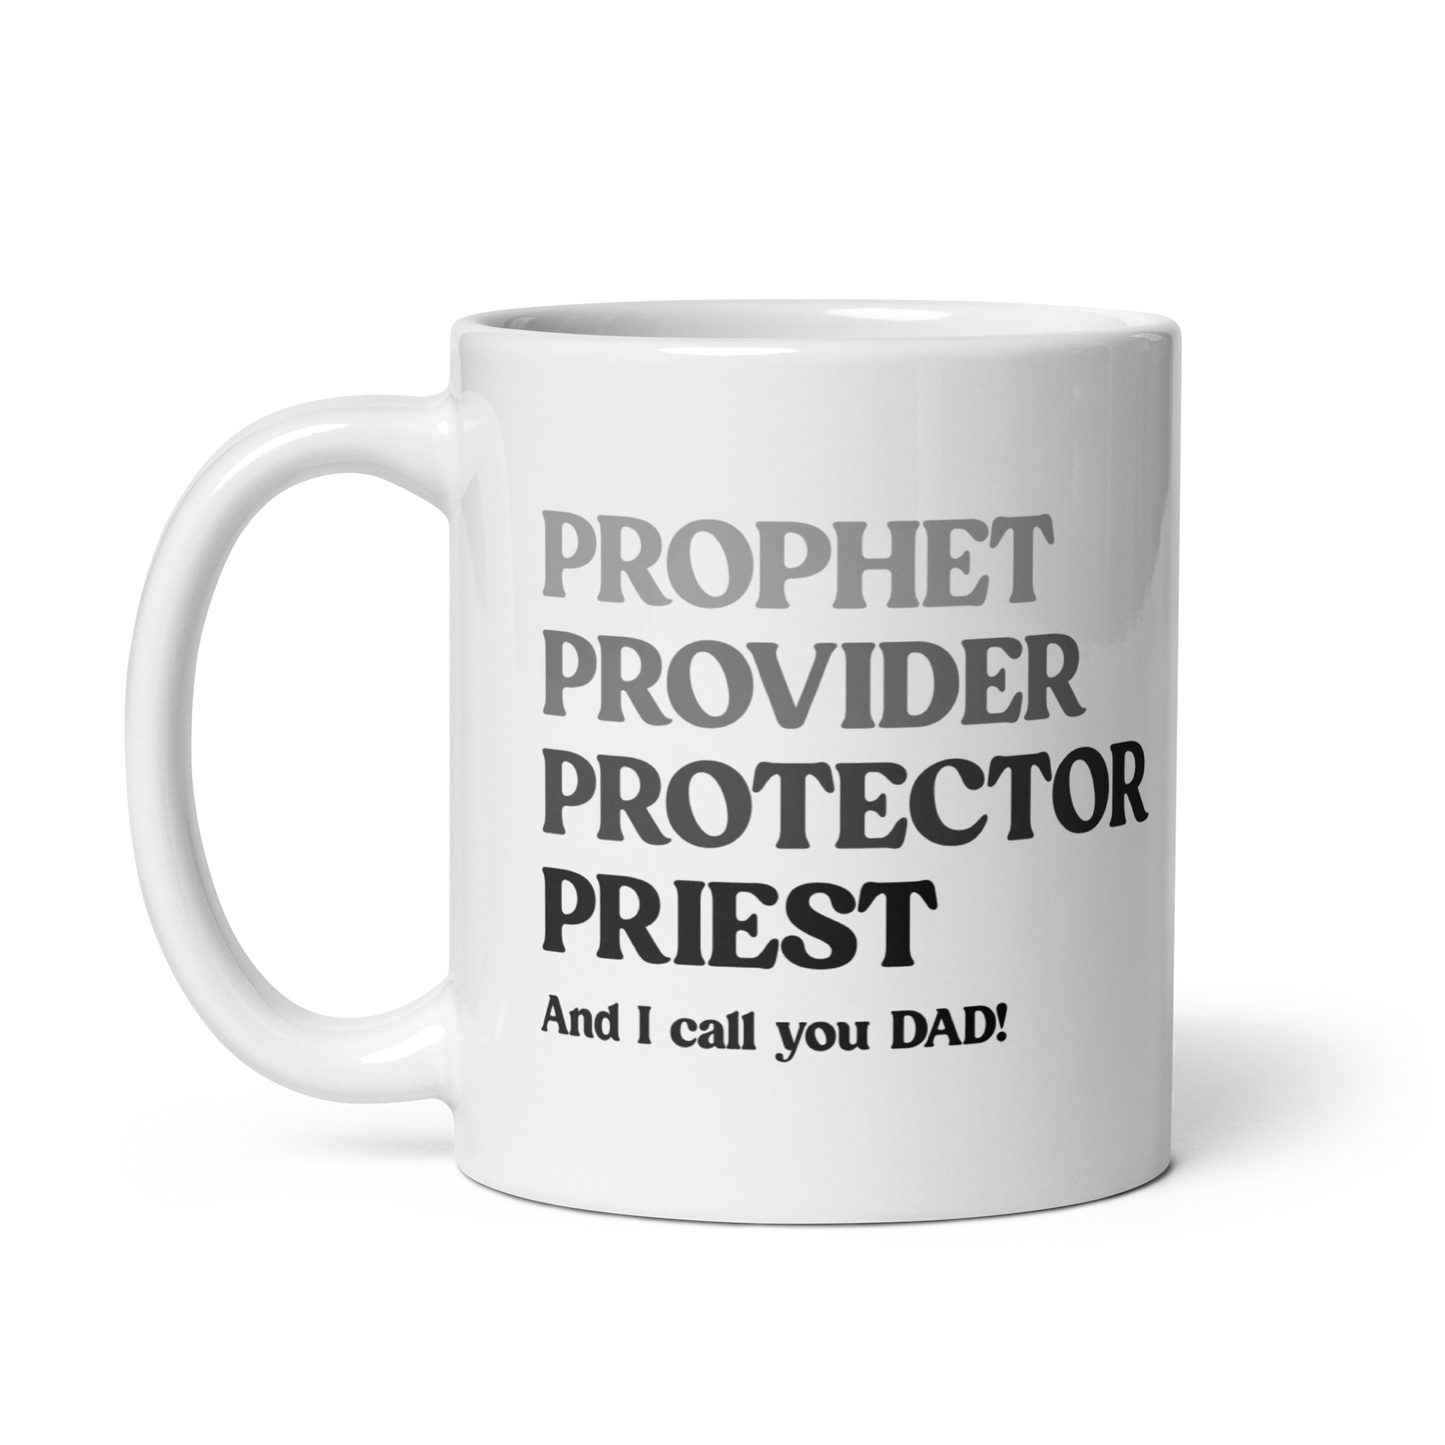 Prophet, Provider, Protector, Priest Mug For Men